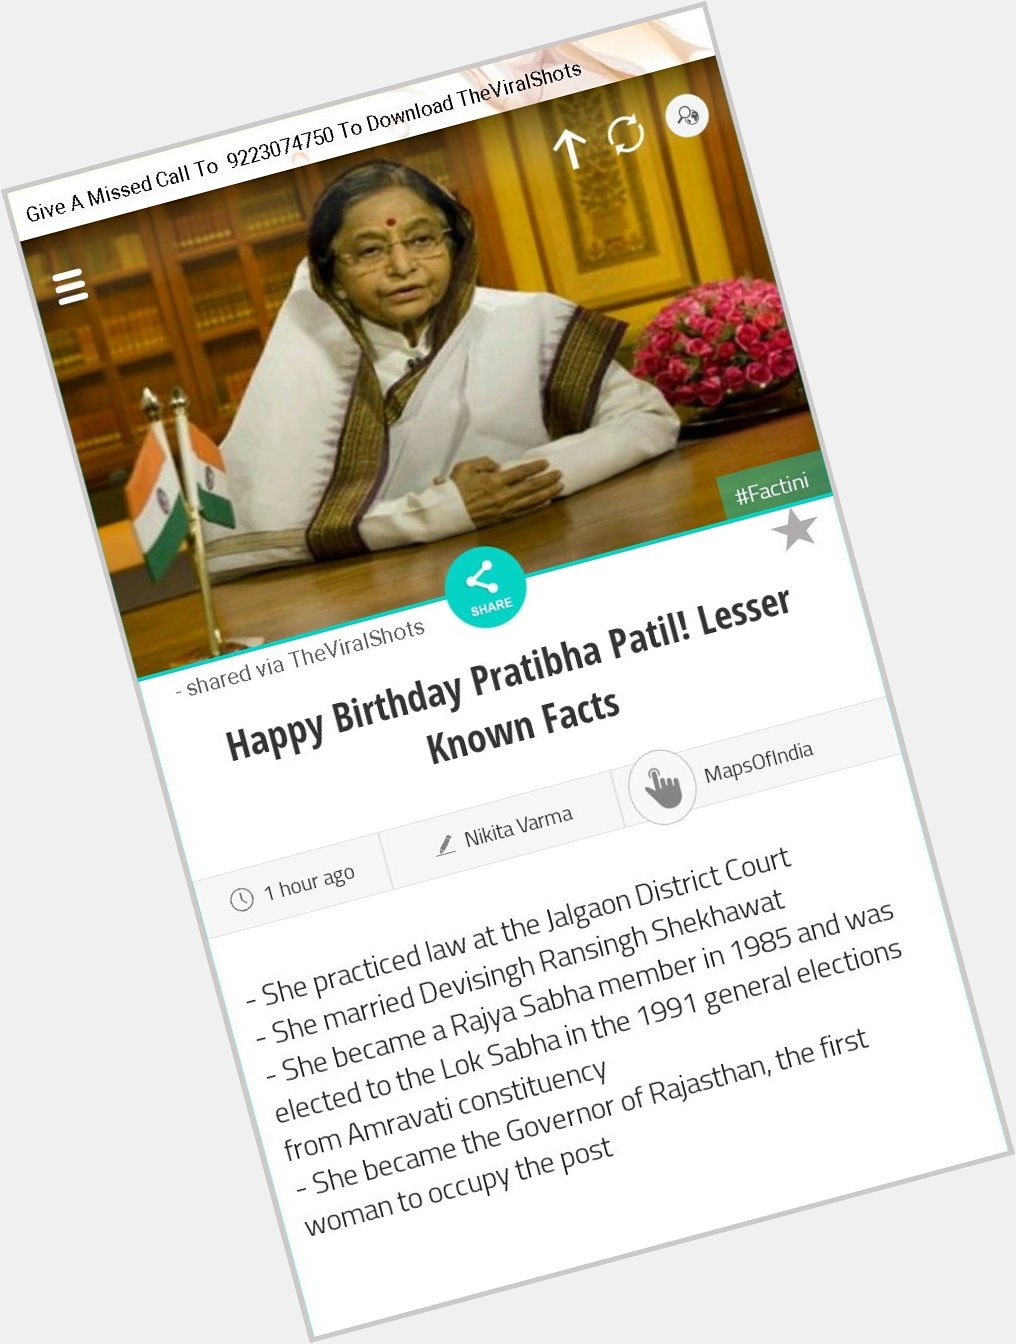 Happy Birthday Pratibha Patil! Lesser Known Facts
 